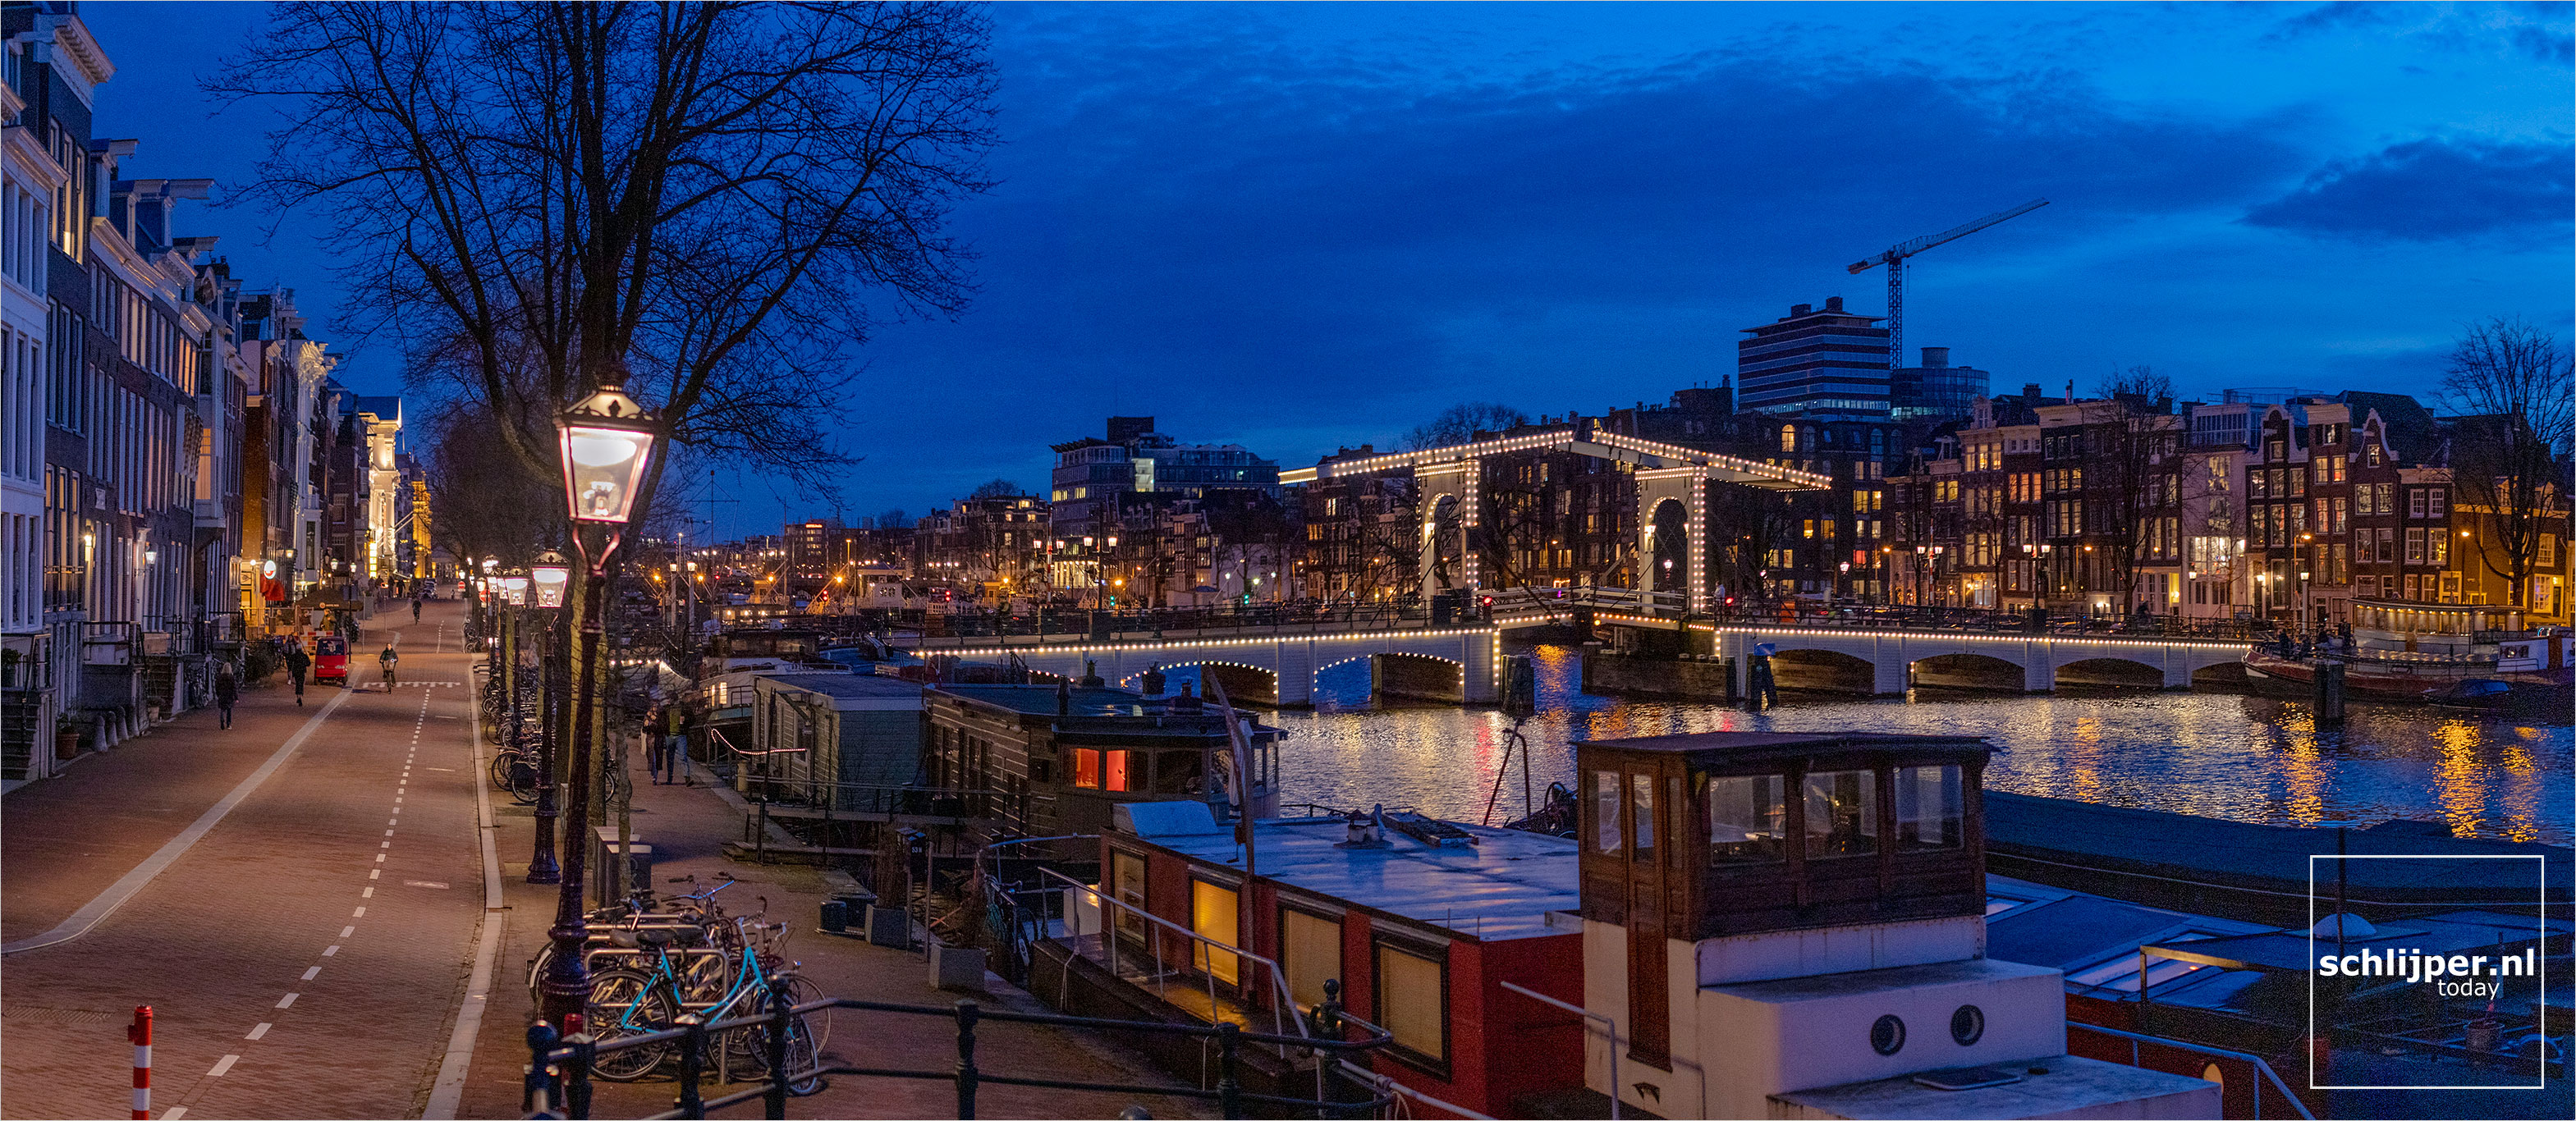 The Netherlands, Amsterdam, 19 februari 2021